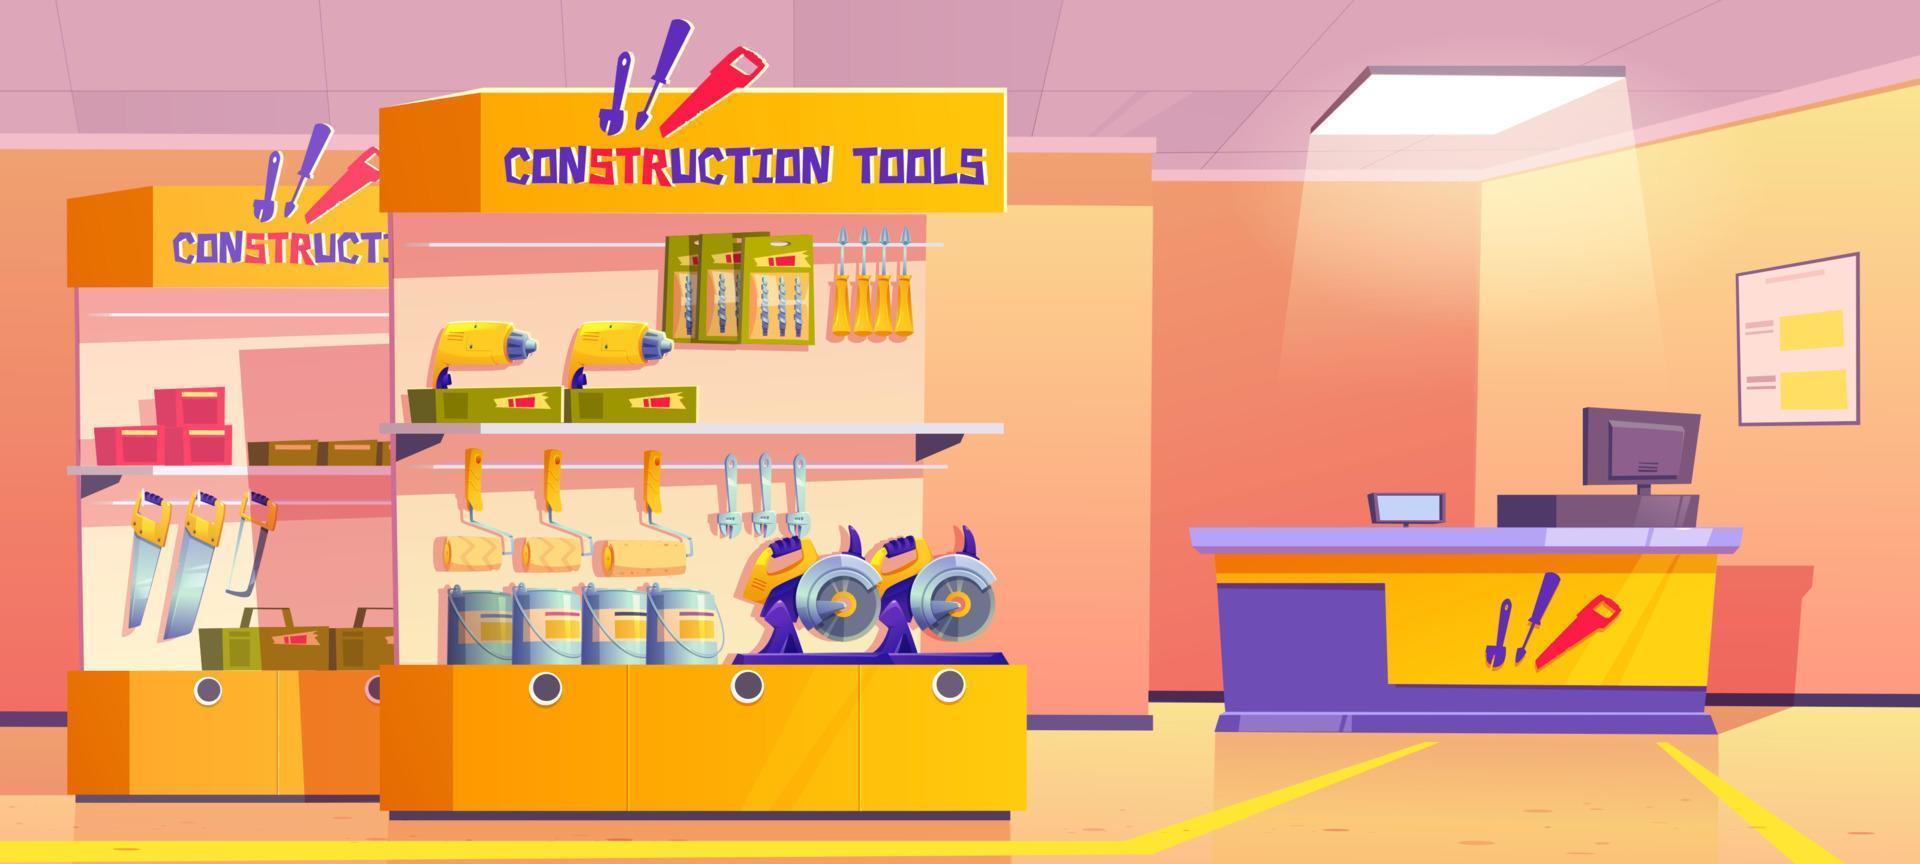 Construction tools store, hardware shop interior vector